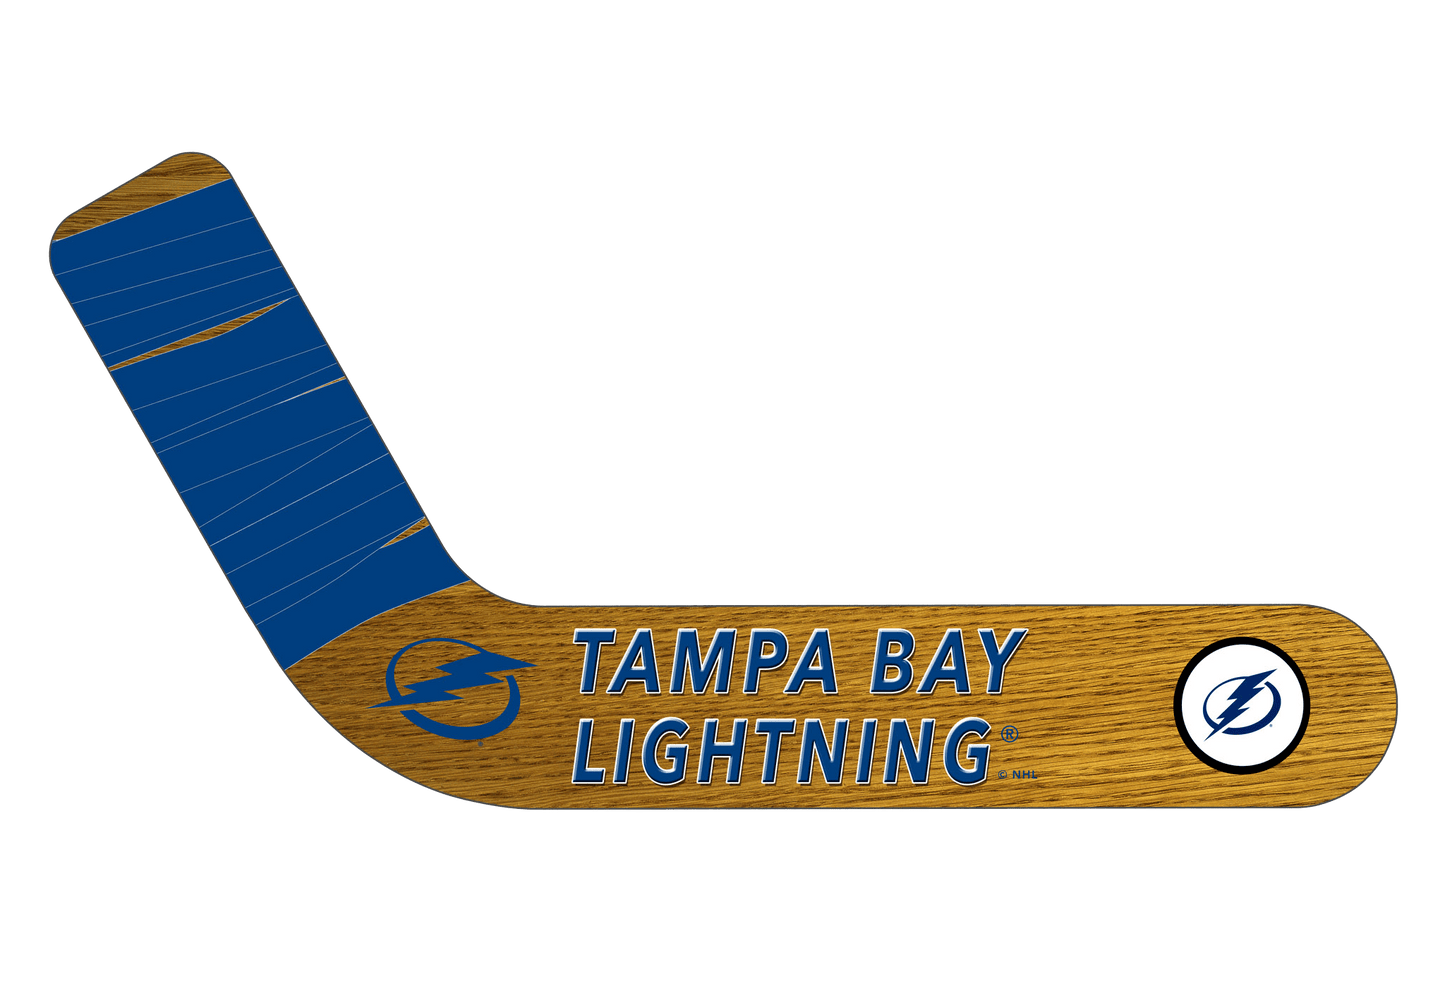 Tampa Bay Lightning® Fan Blades